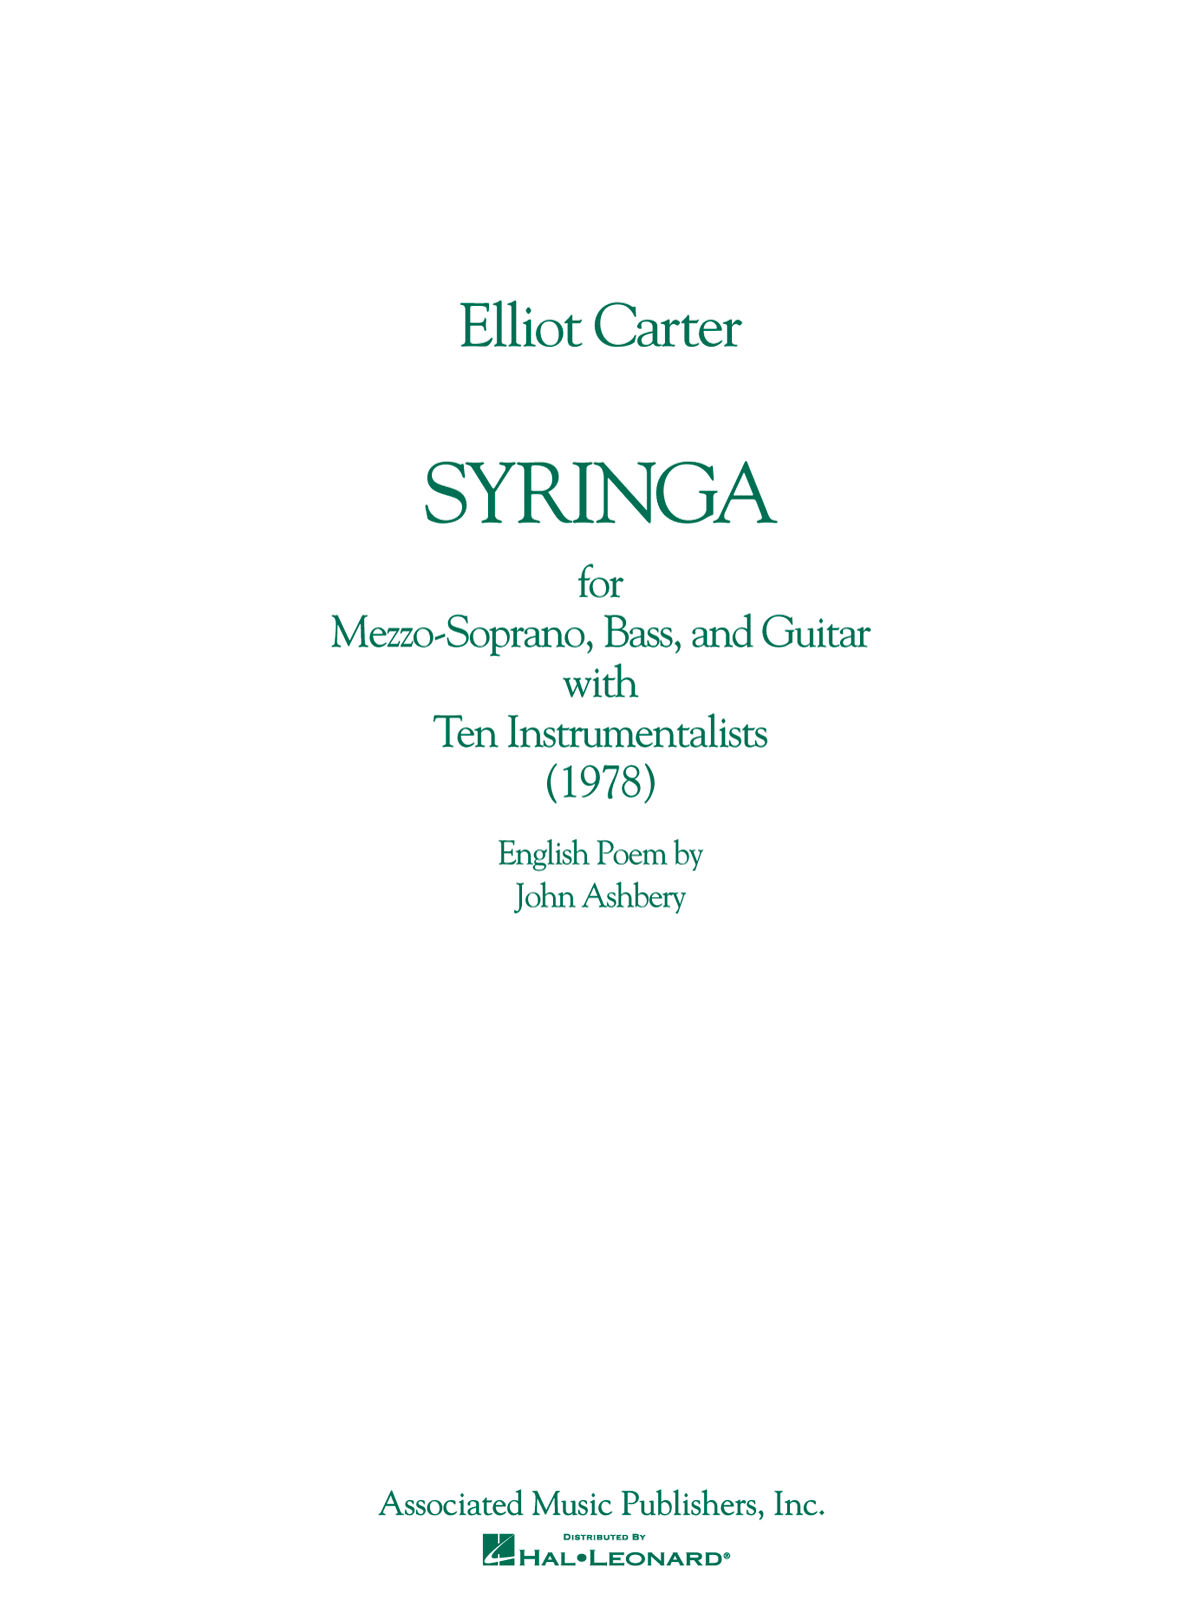 Elliott Carter: Syringa